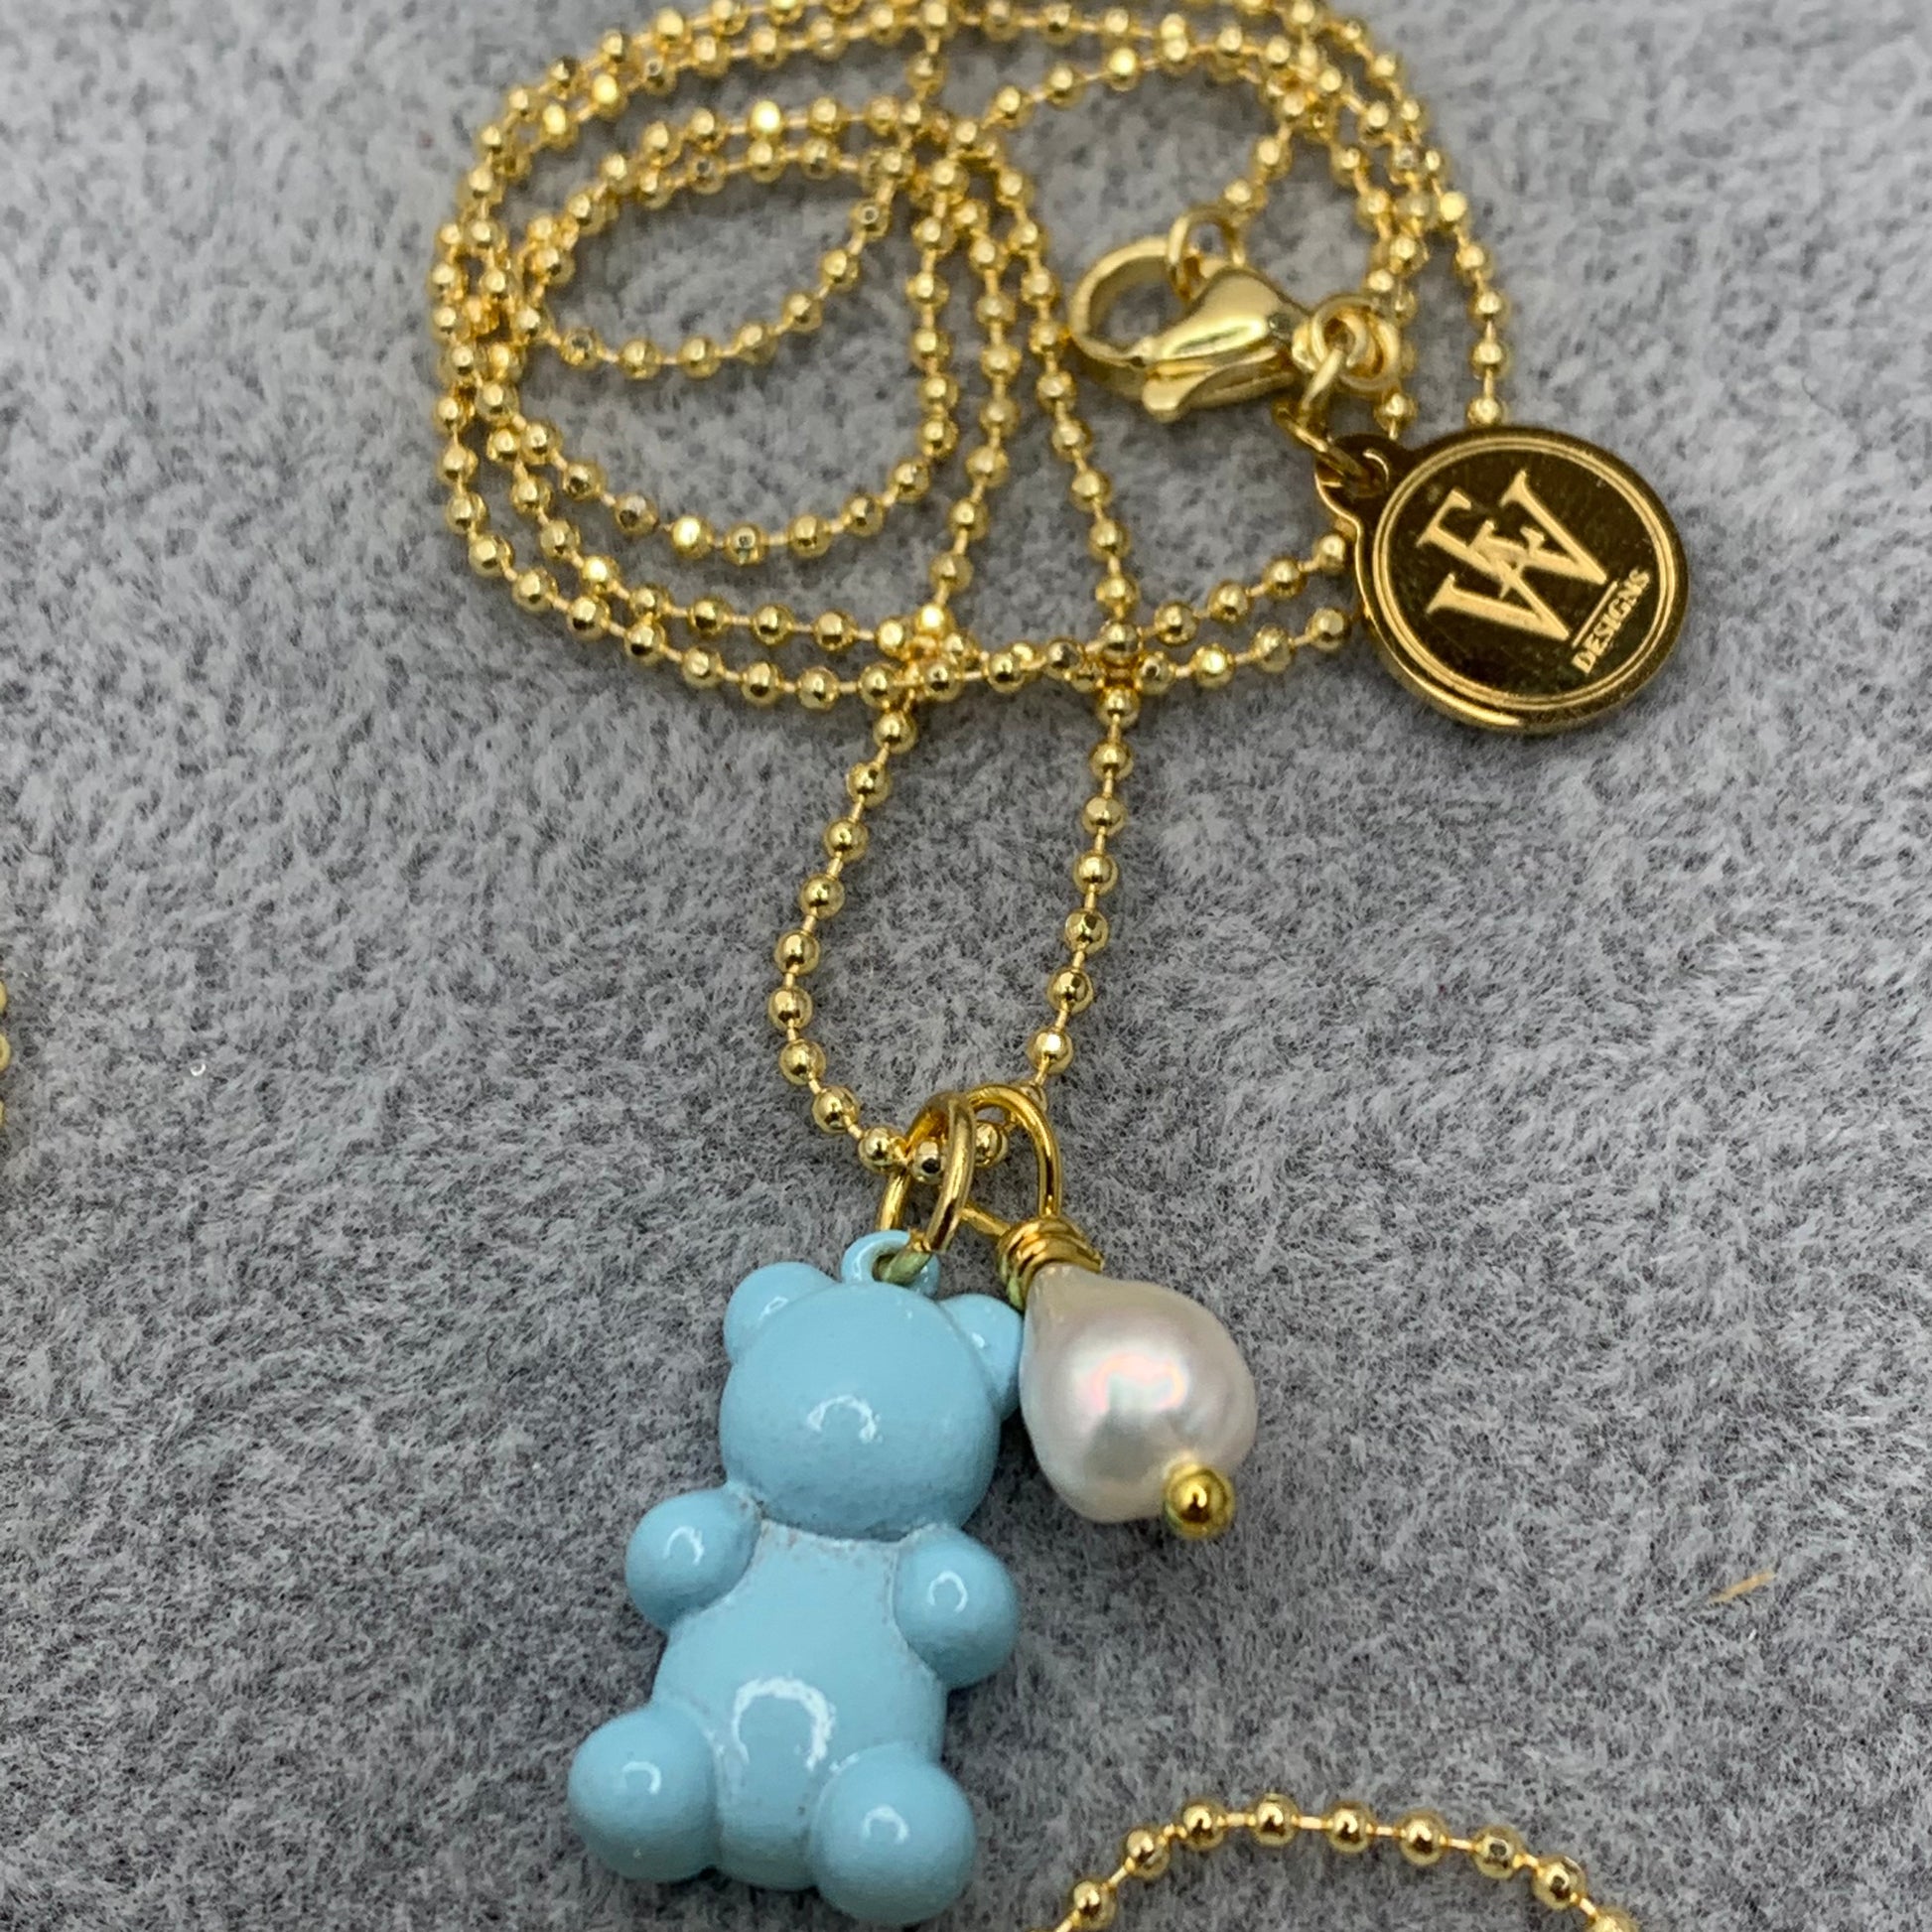 Teal gummy bear pendant